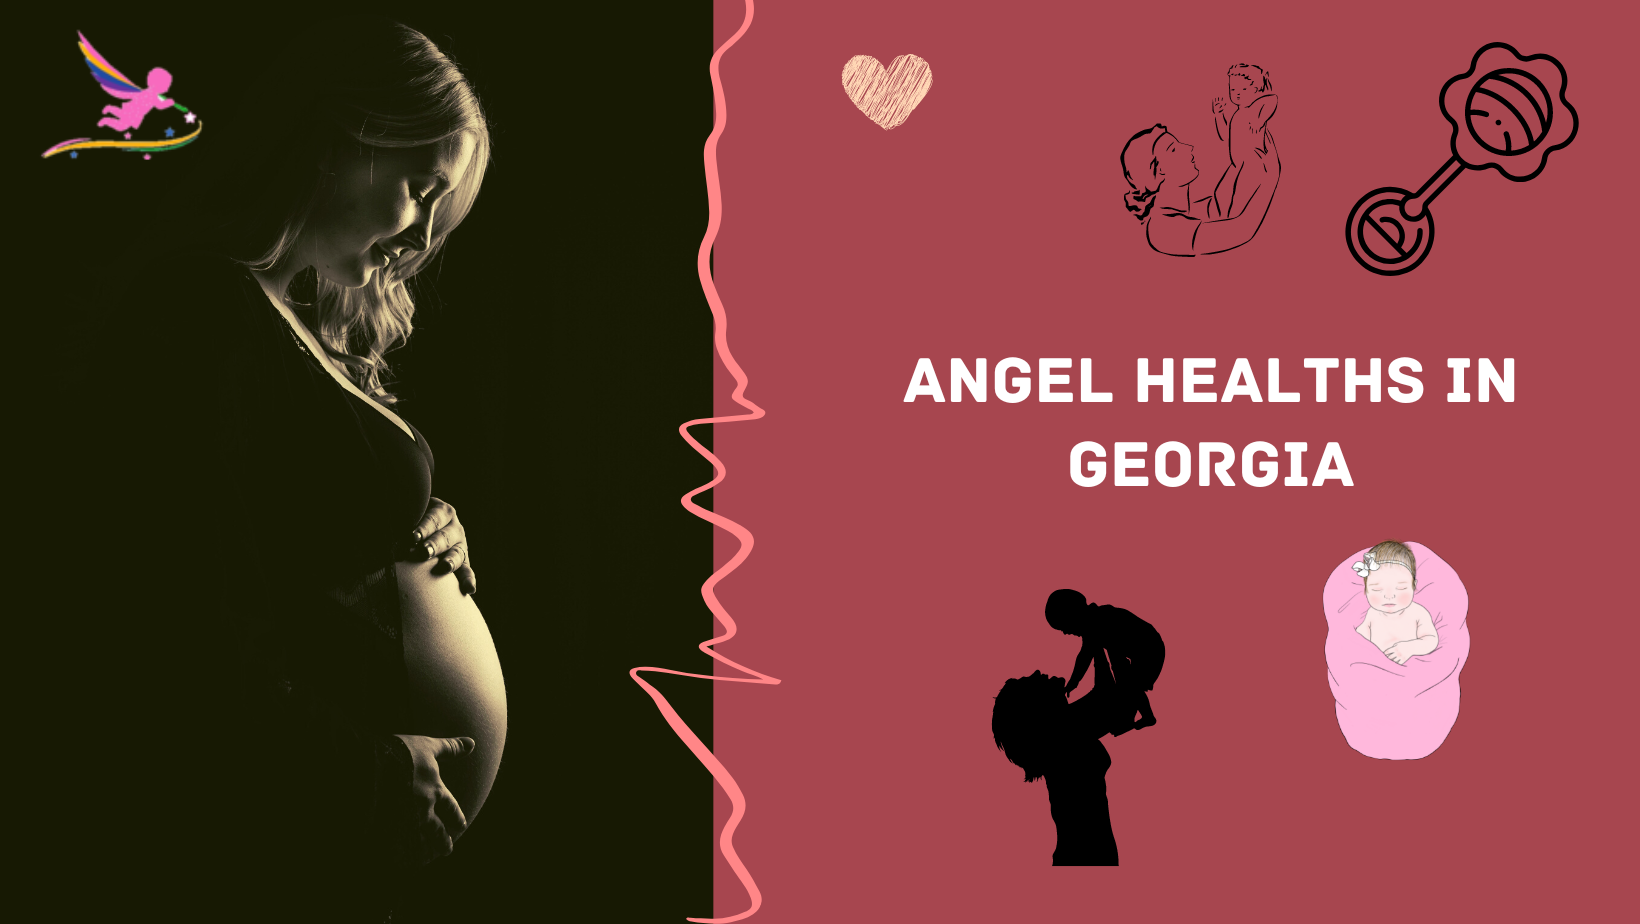 ANGEL HEALTHS IN GEORGIA